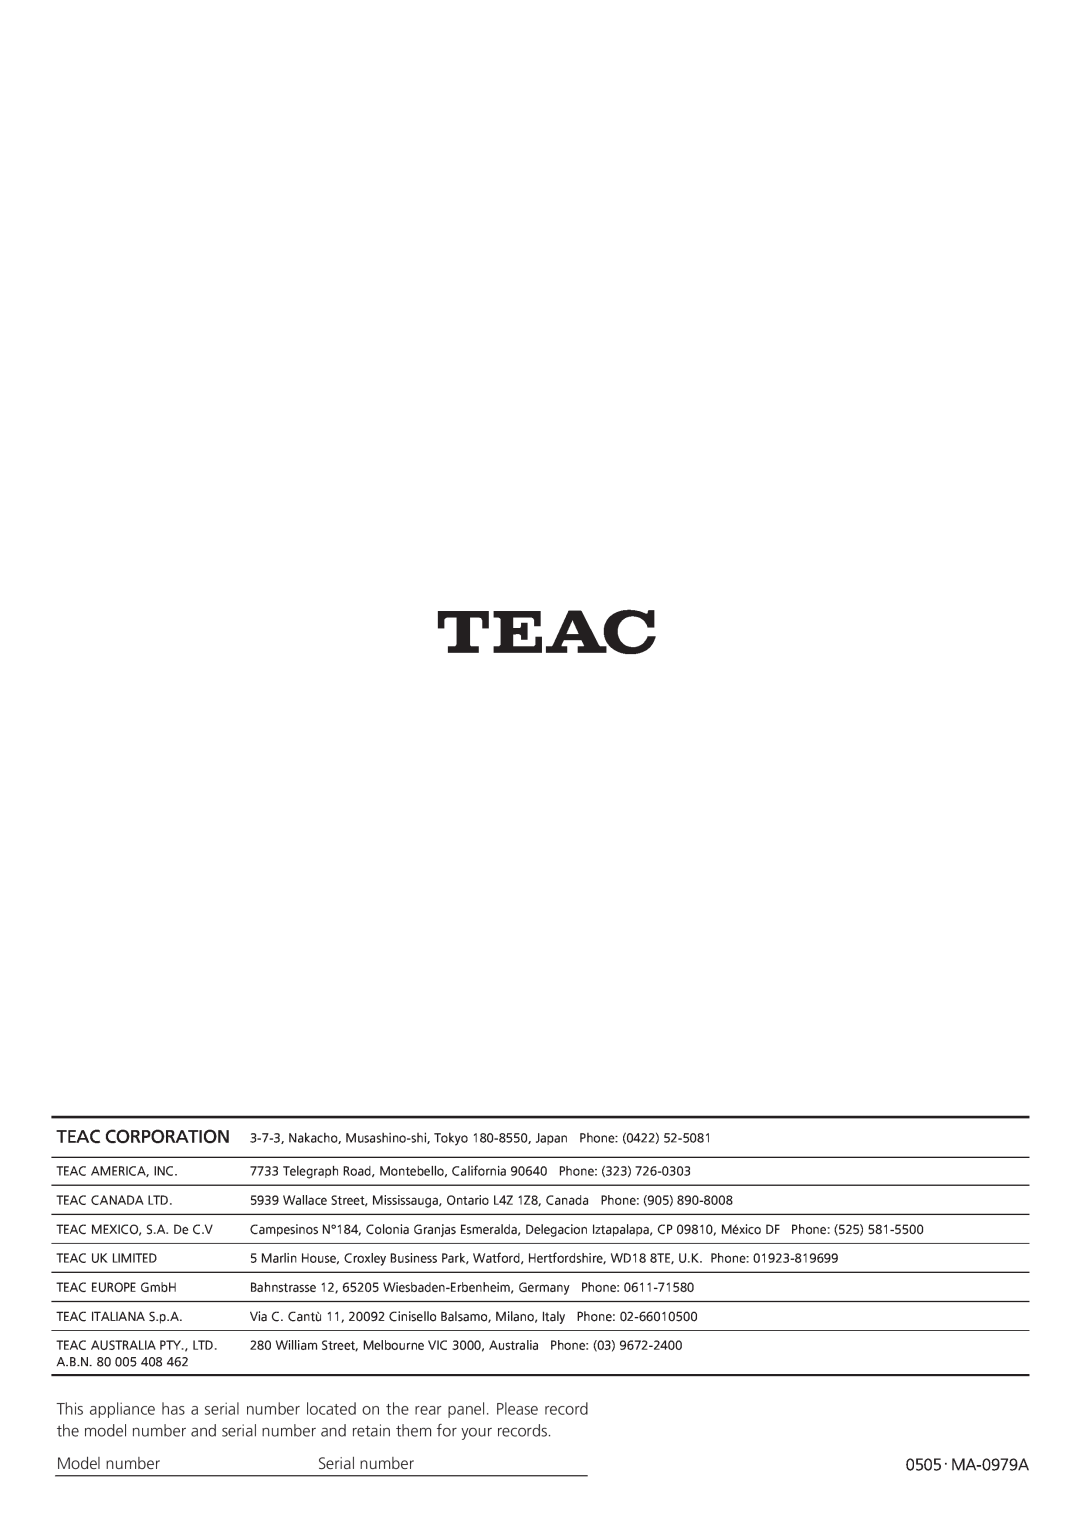 Teac AG-790 owner manual Teac Corporation, Model number, Serial number 